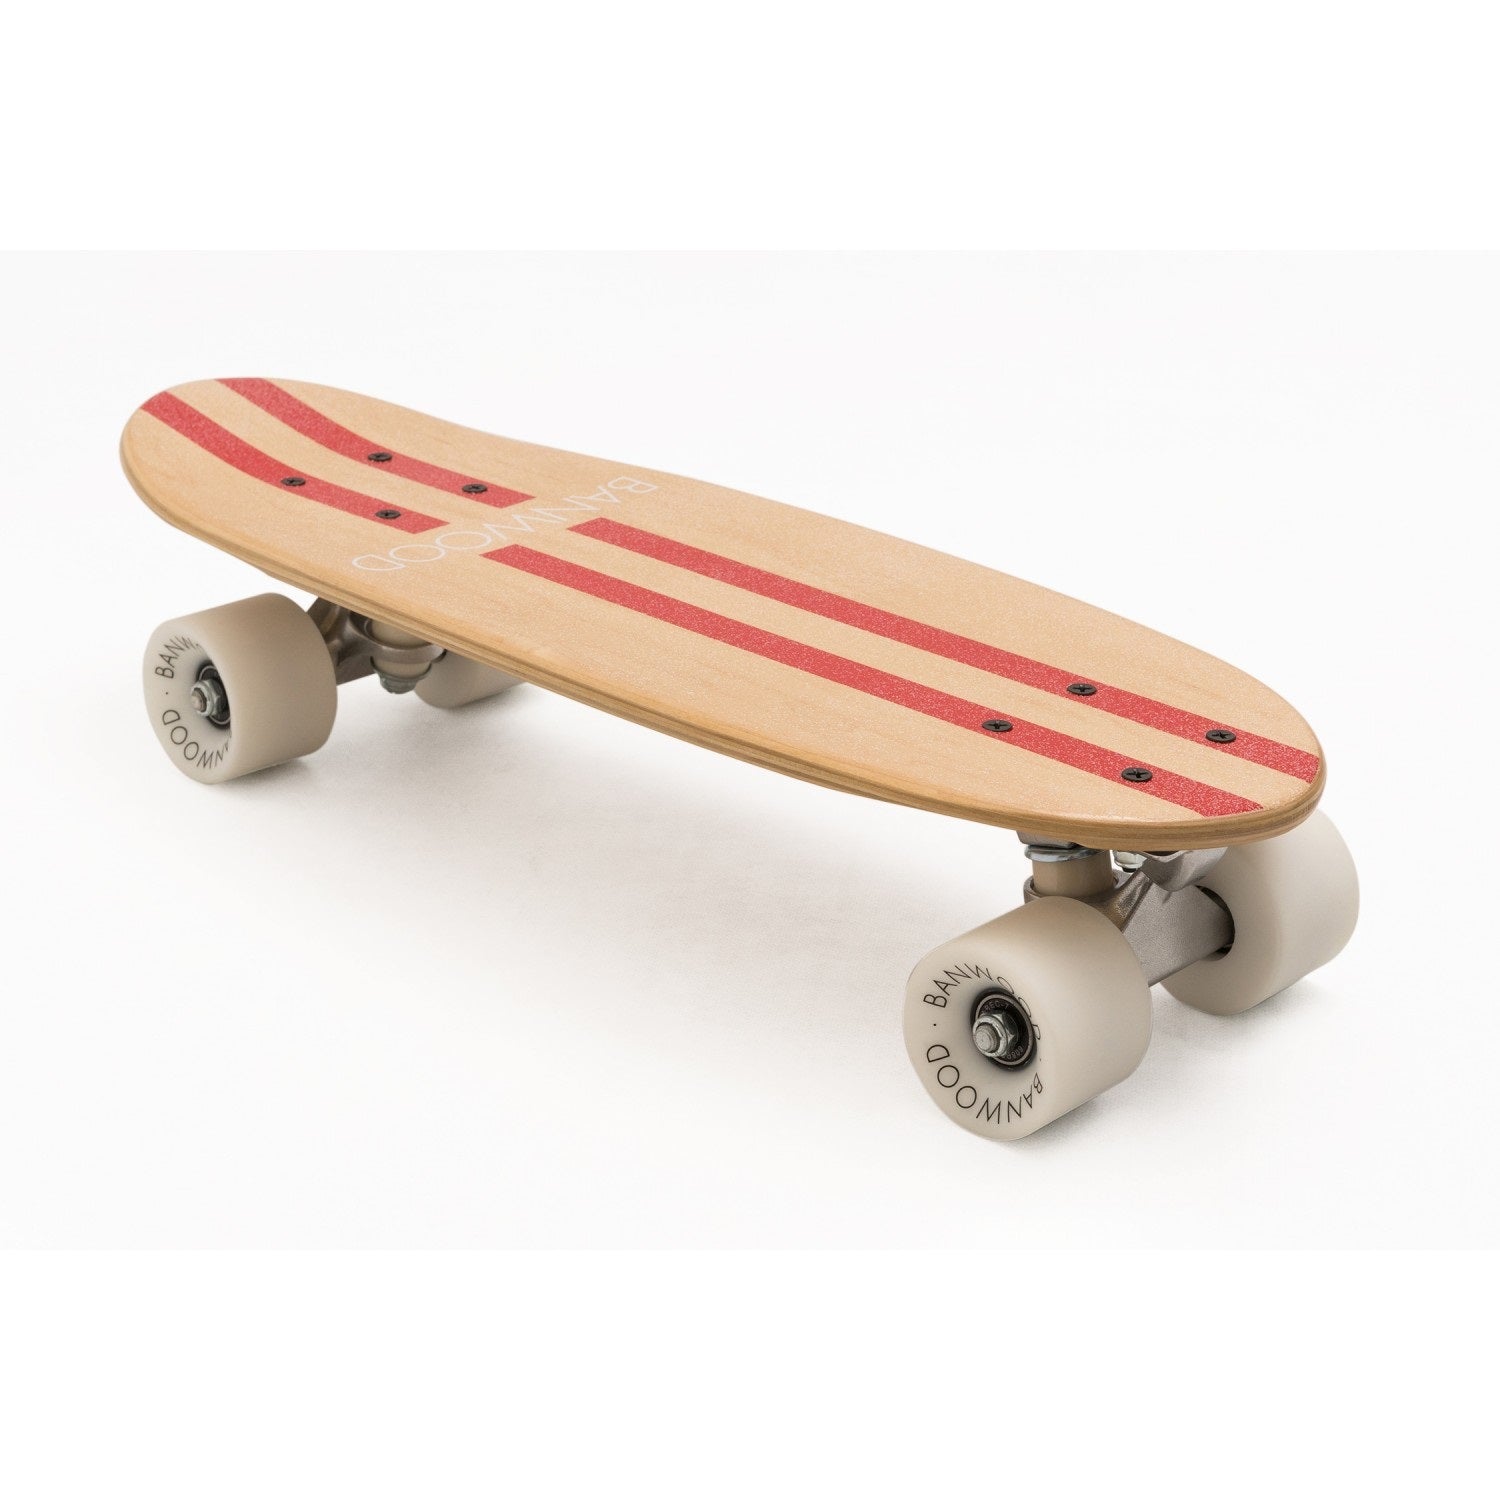 Banwood Skateboard + Protective Gear - Red